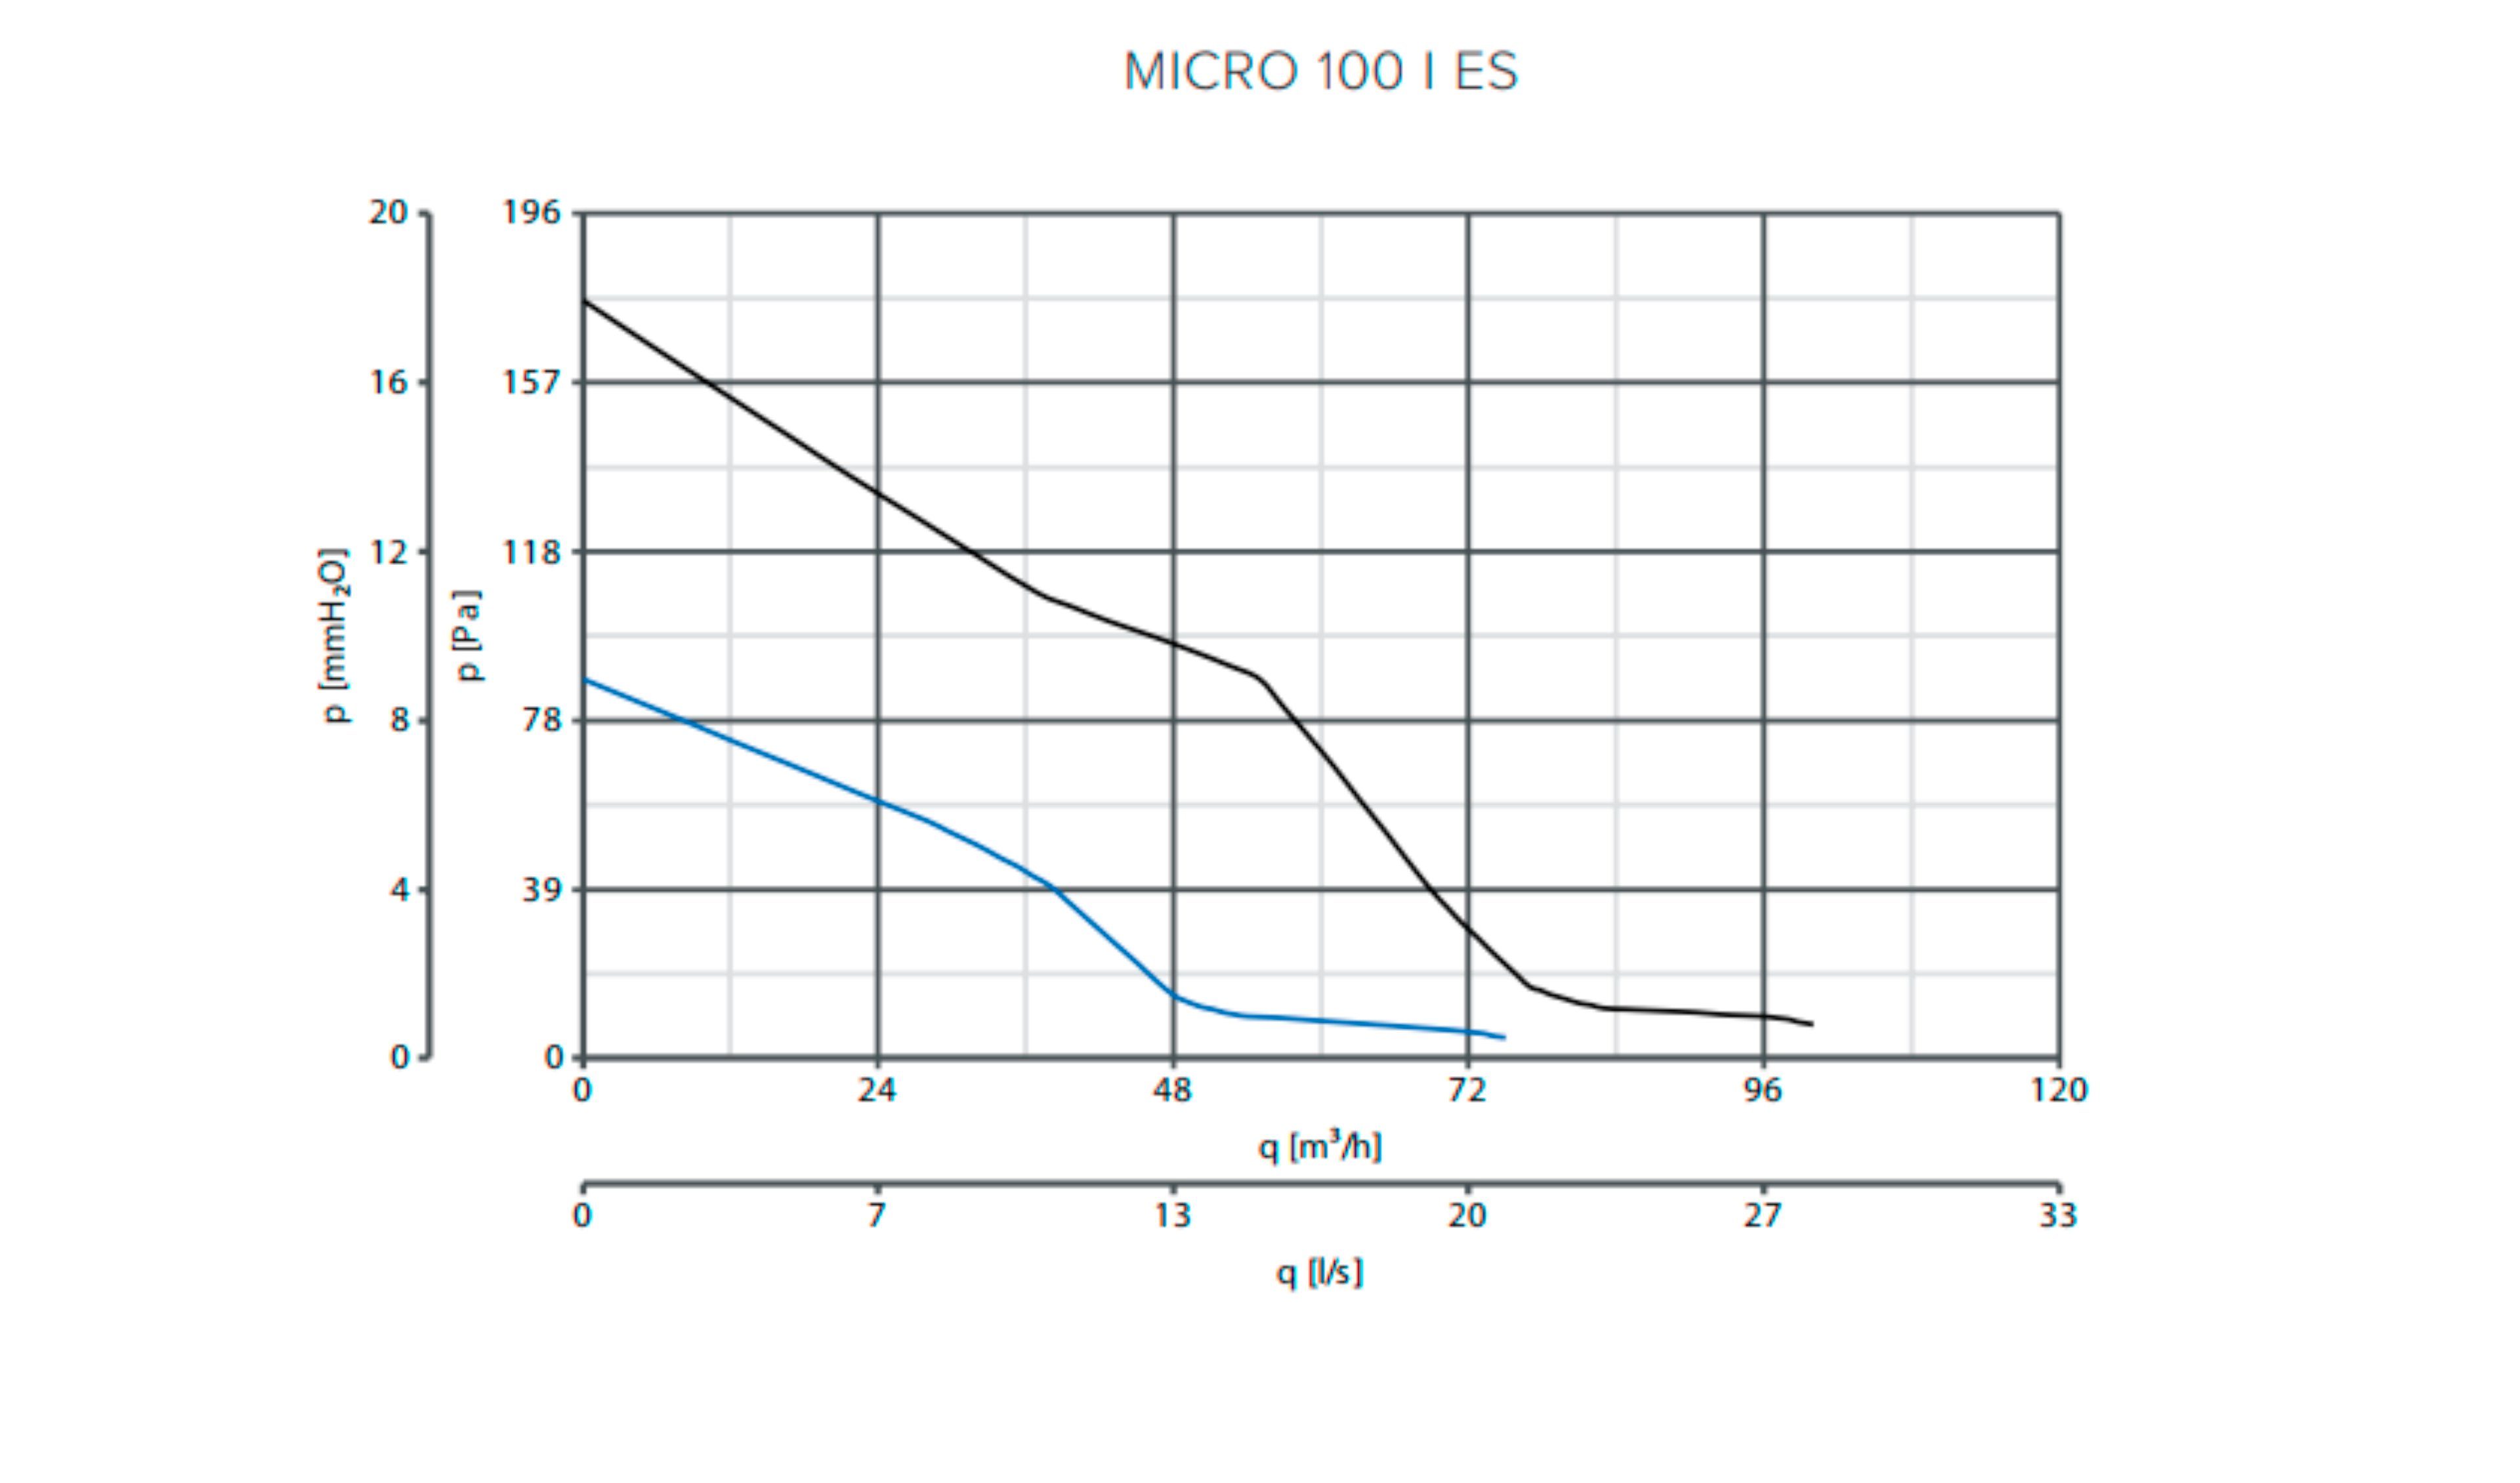 Nachlaufrelais Micro I Wandventilator Quadro T, Mit Vortice ES